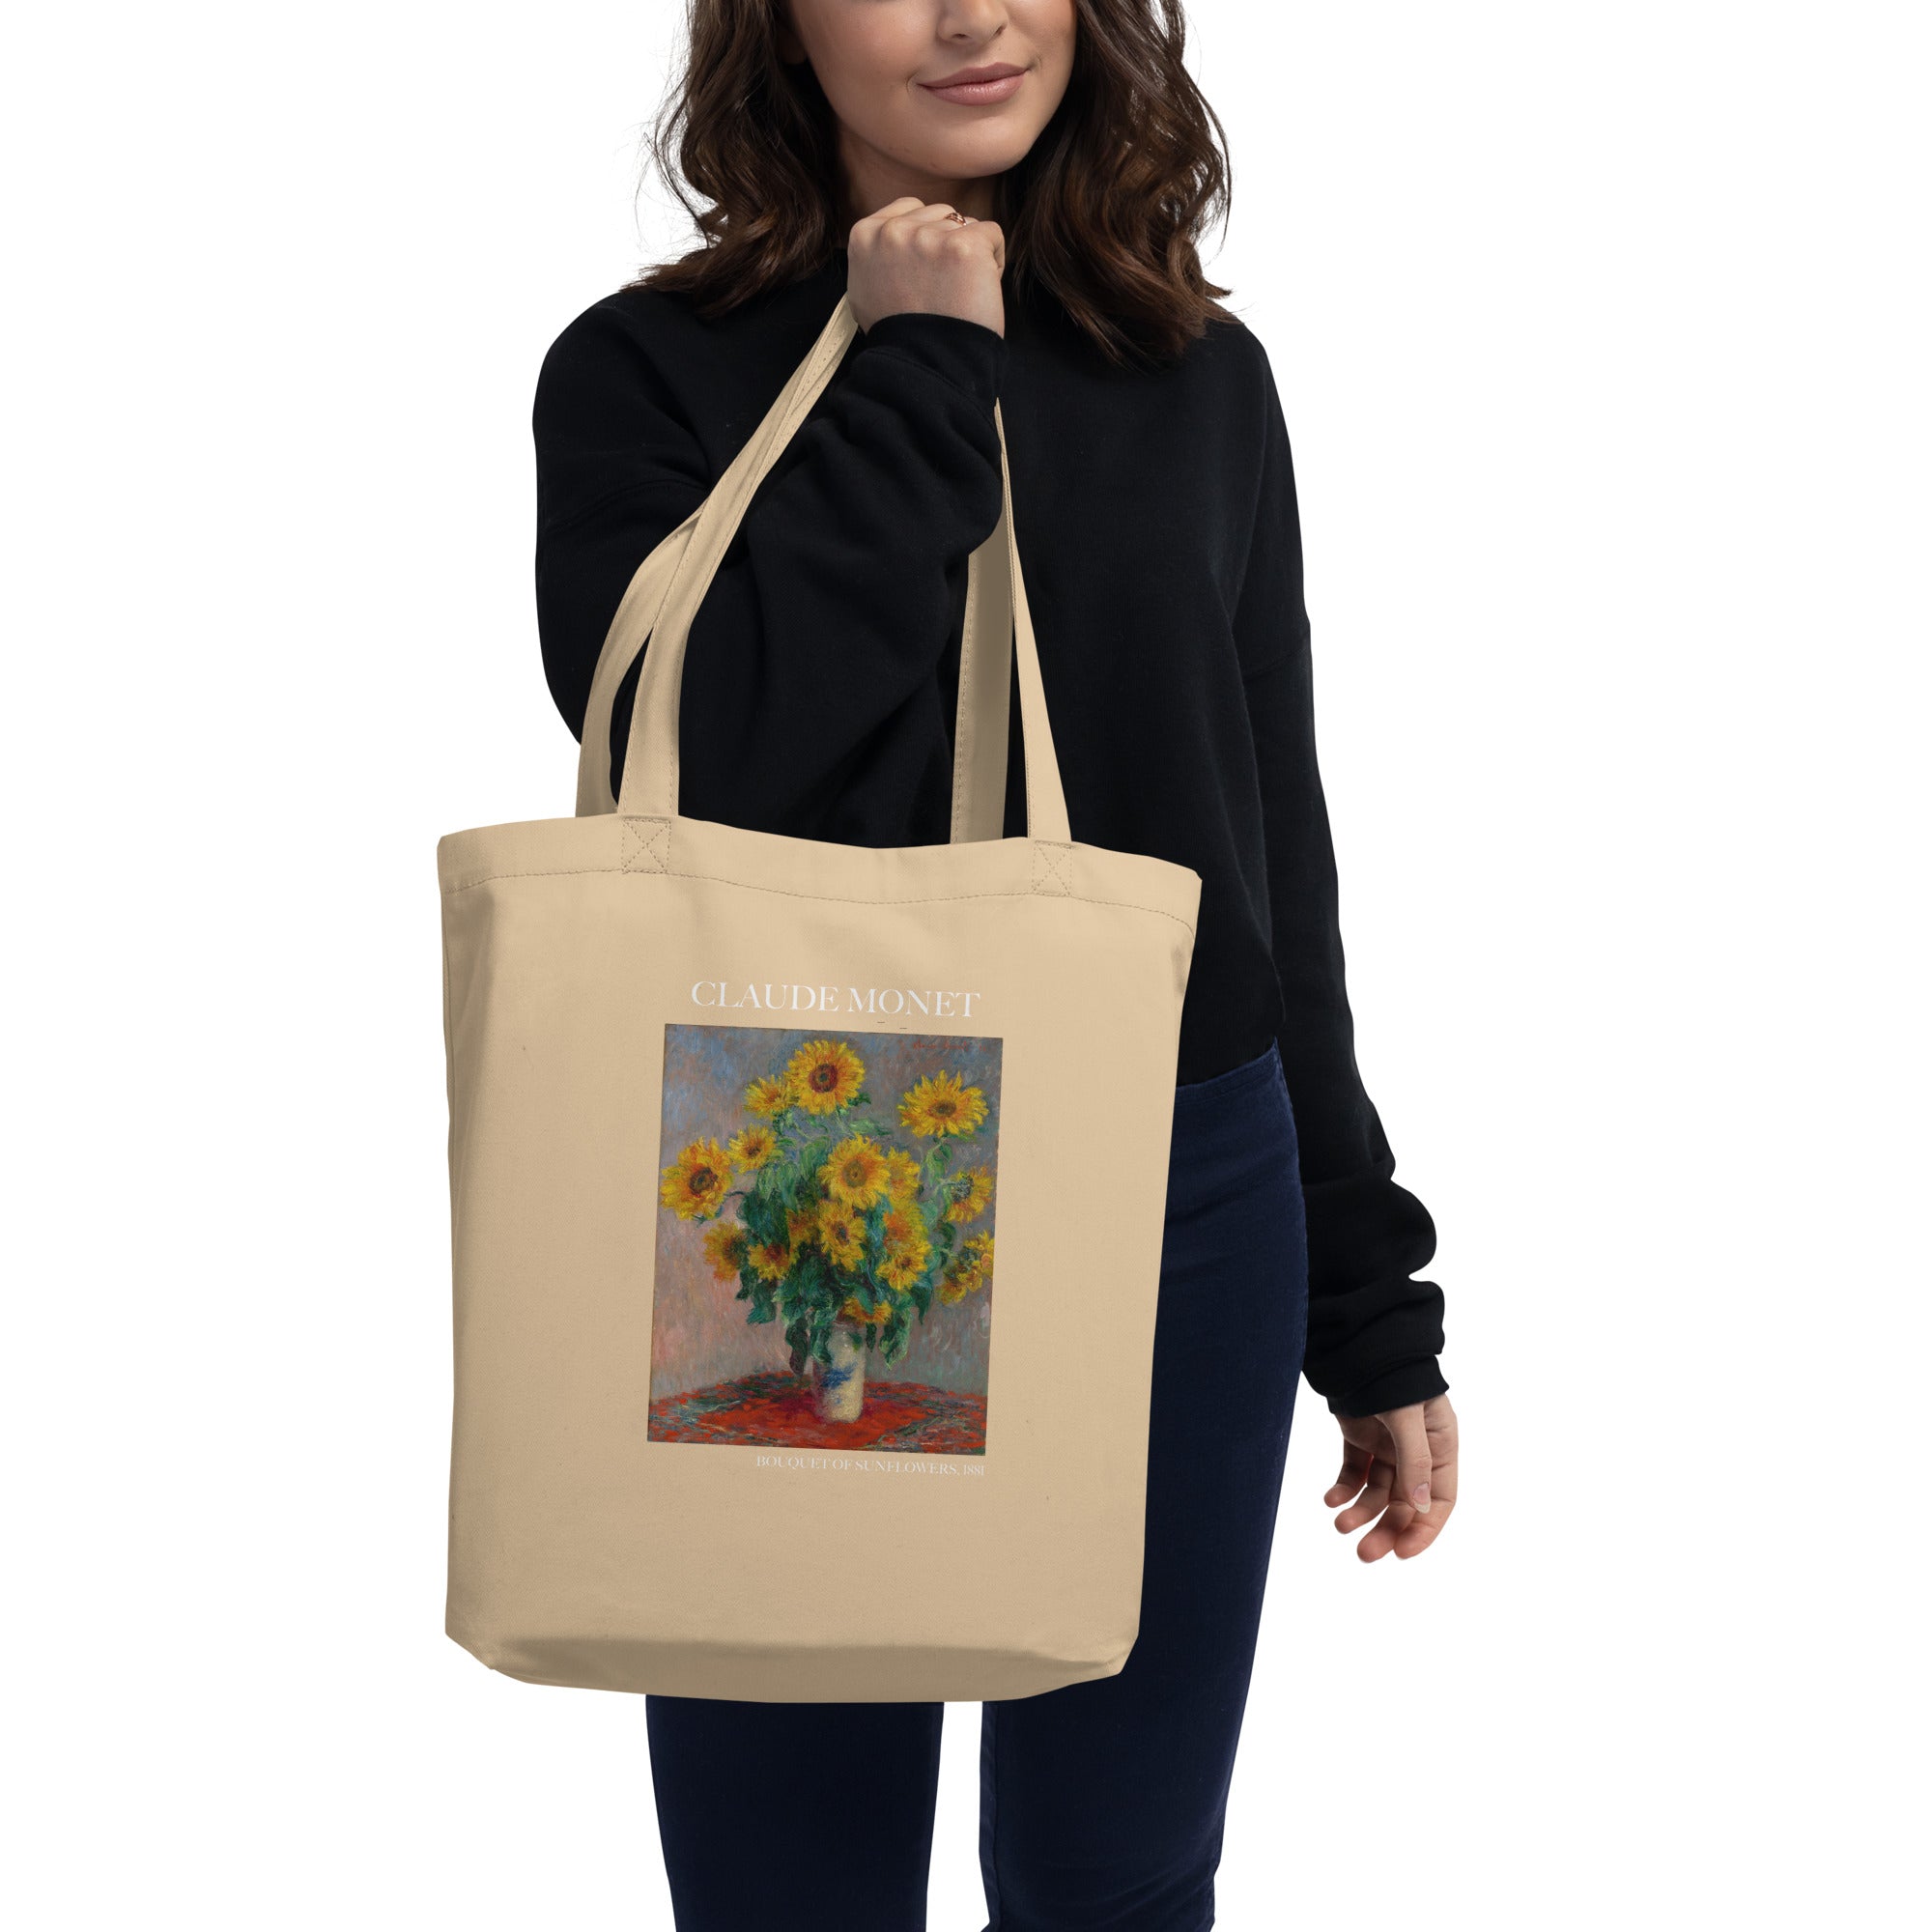 Claude Monet 'Bouquet of Sunflowers' Famous Painting Totebag | Eco Friendly Art Tote Bag